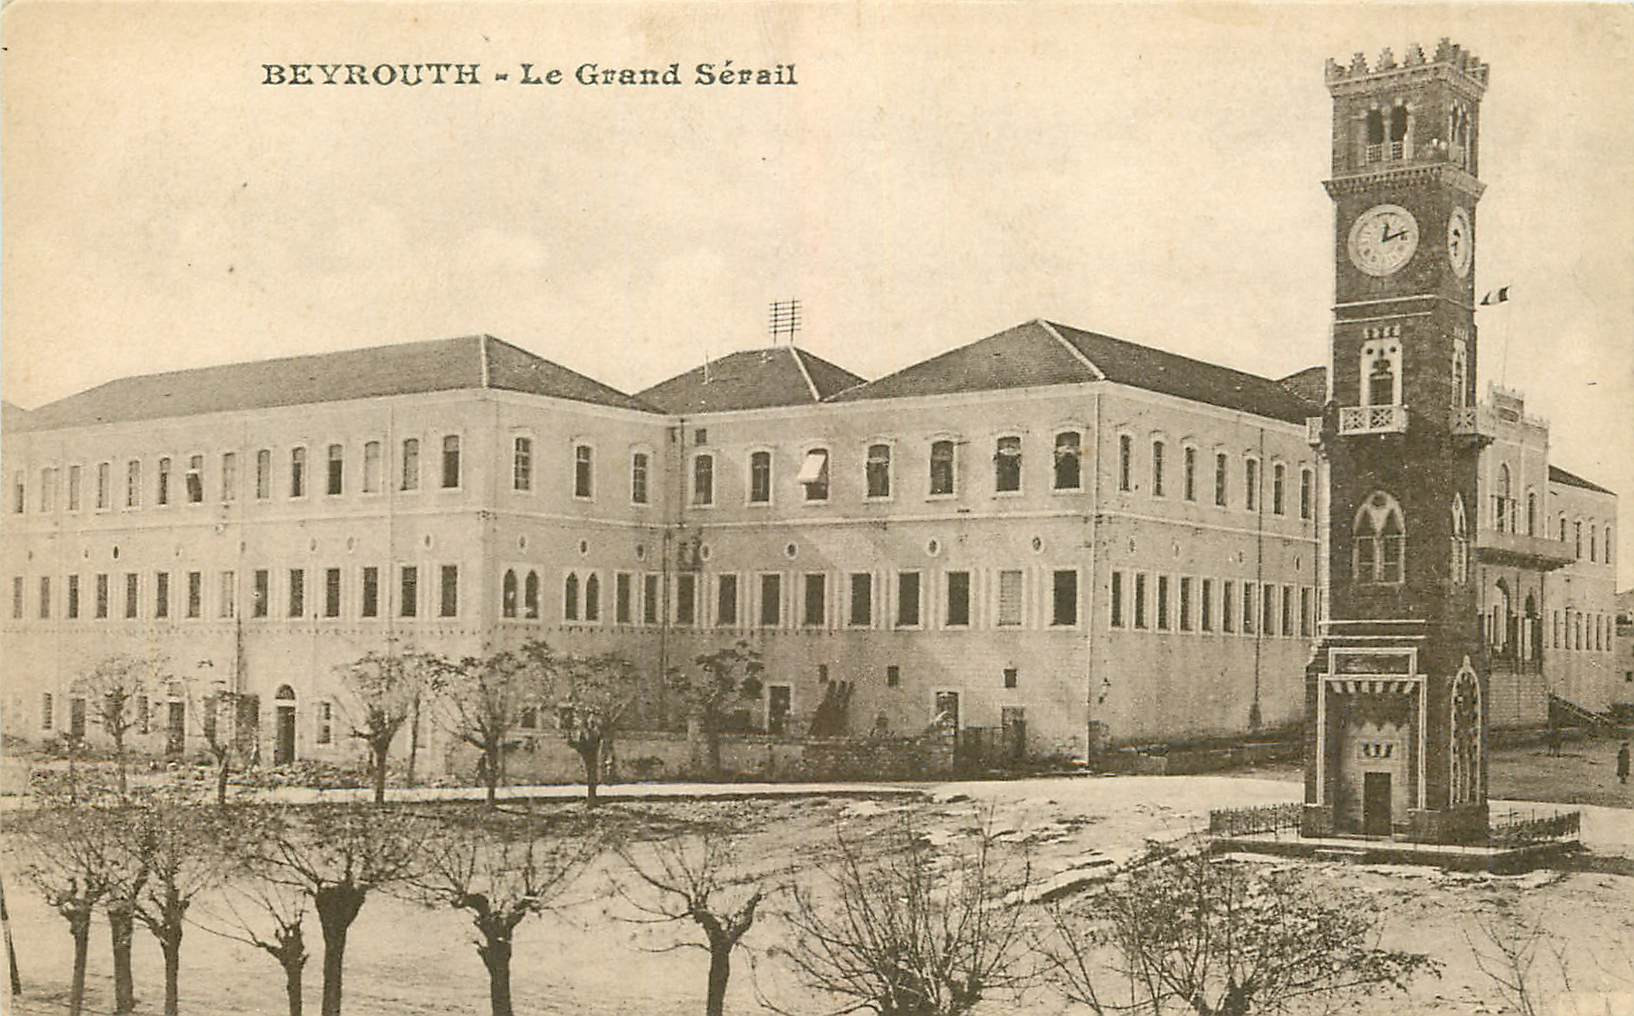 WW BEYROUTH. Le Grand Sérail au Liban